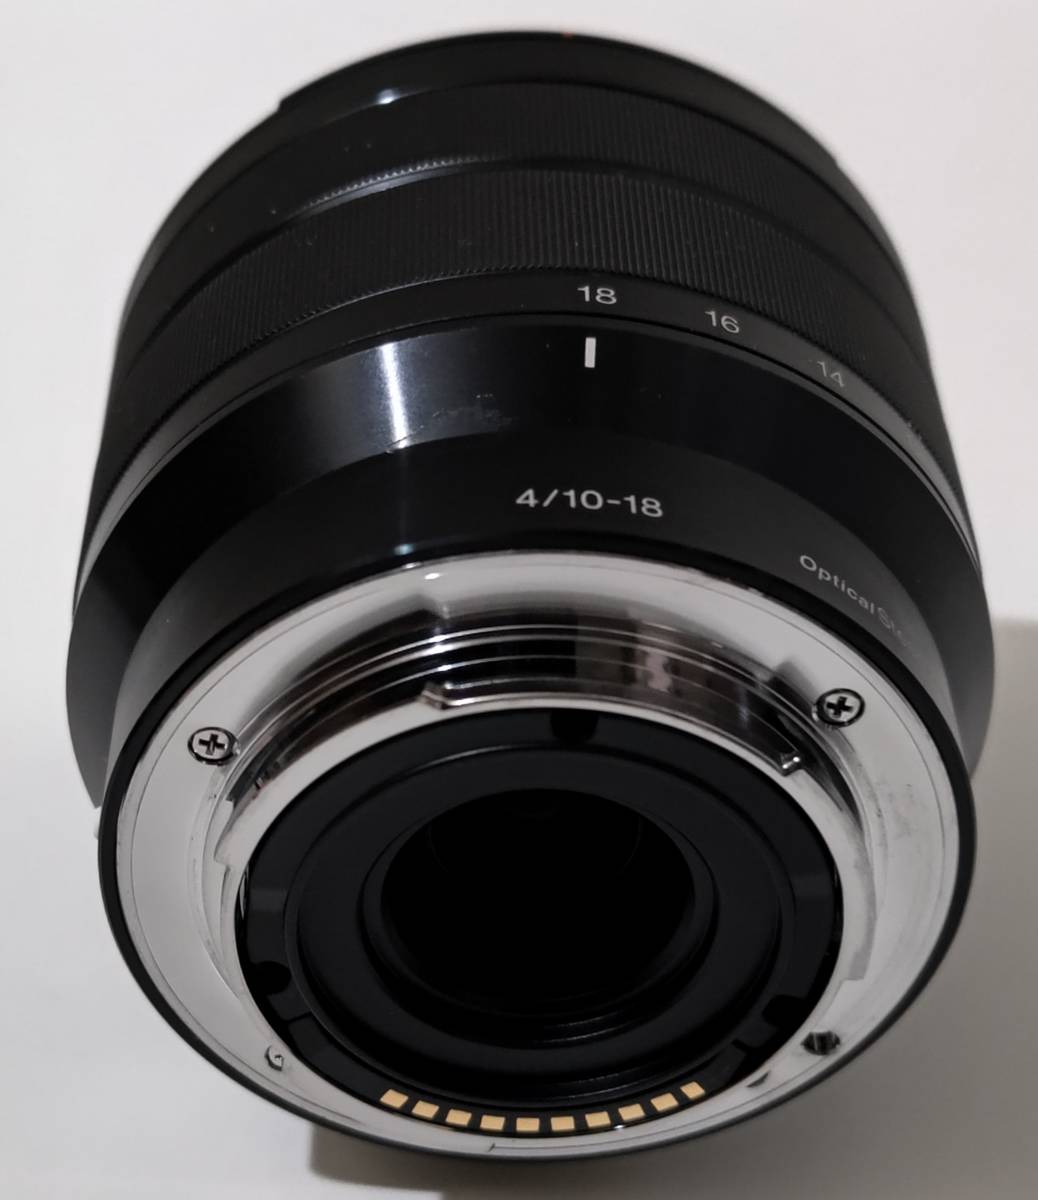  Sony SONY wide-angle zoom lens E- mount SEL 1018 lens E0,25m/0,82ft E 4/10-18 OSS ( black )